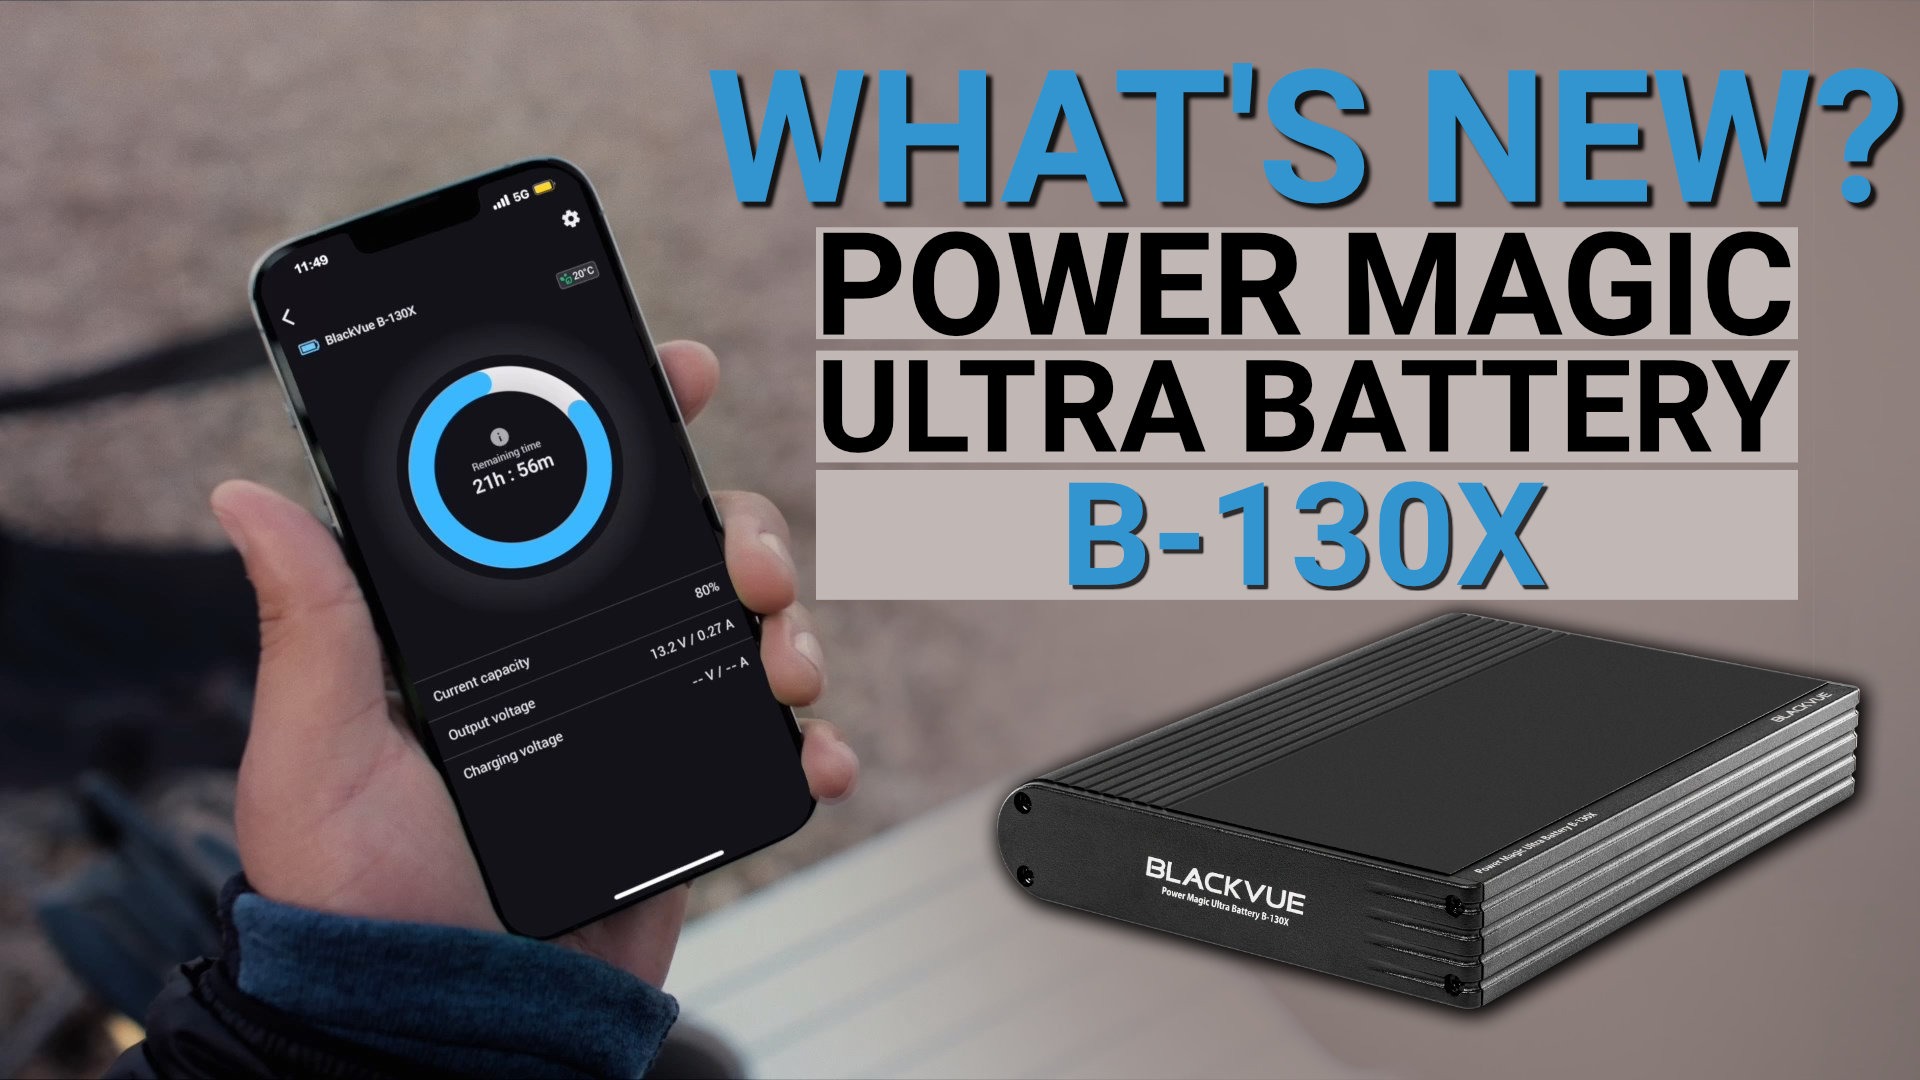 Power Magic Ultra Battery B-130X – What’s New